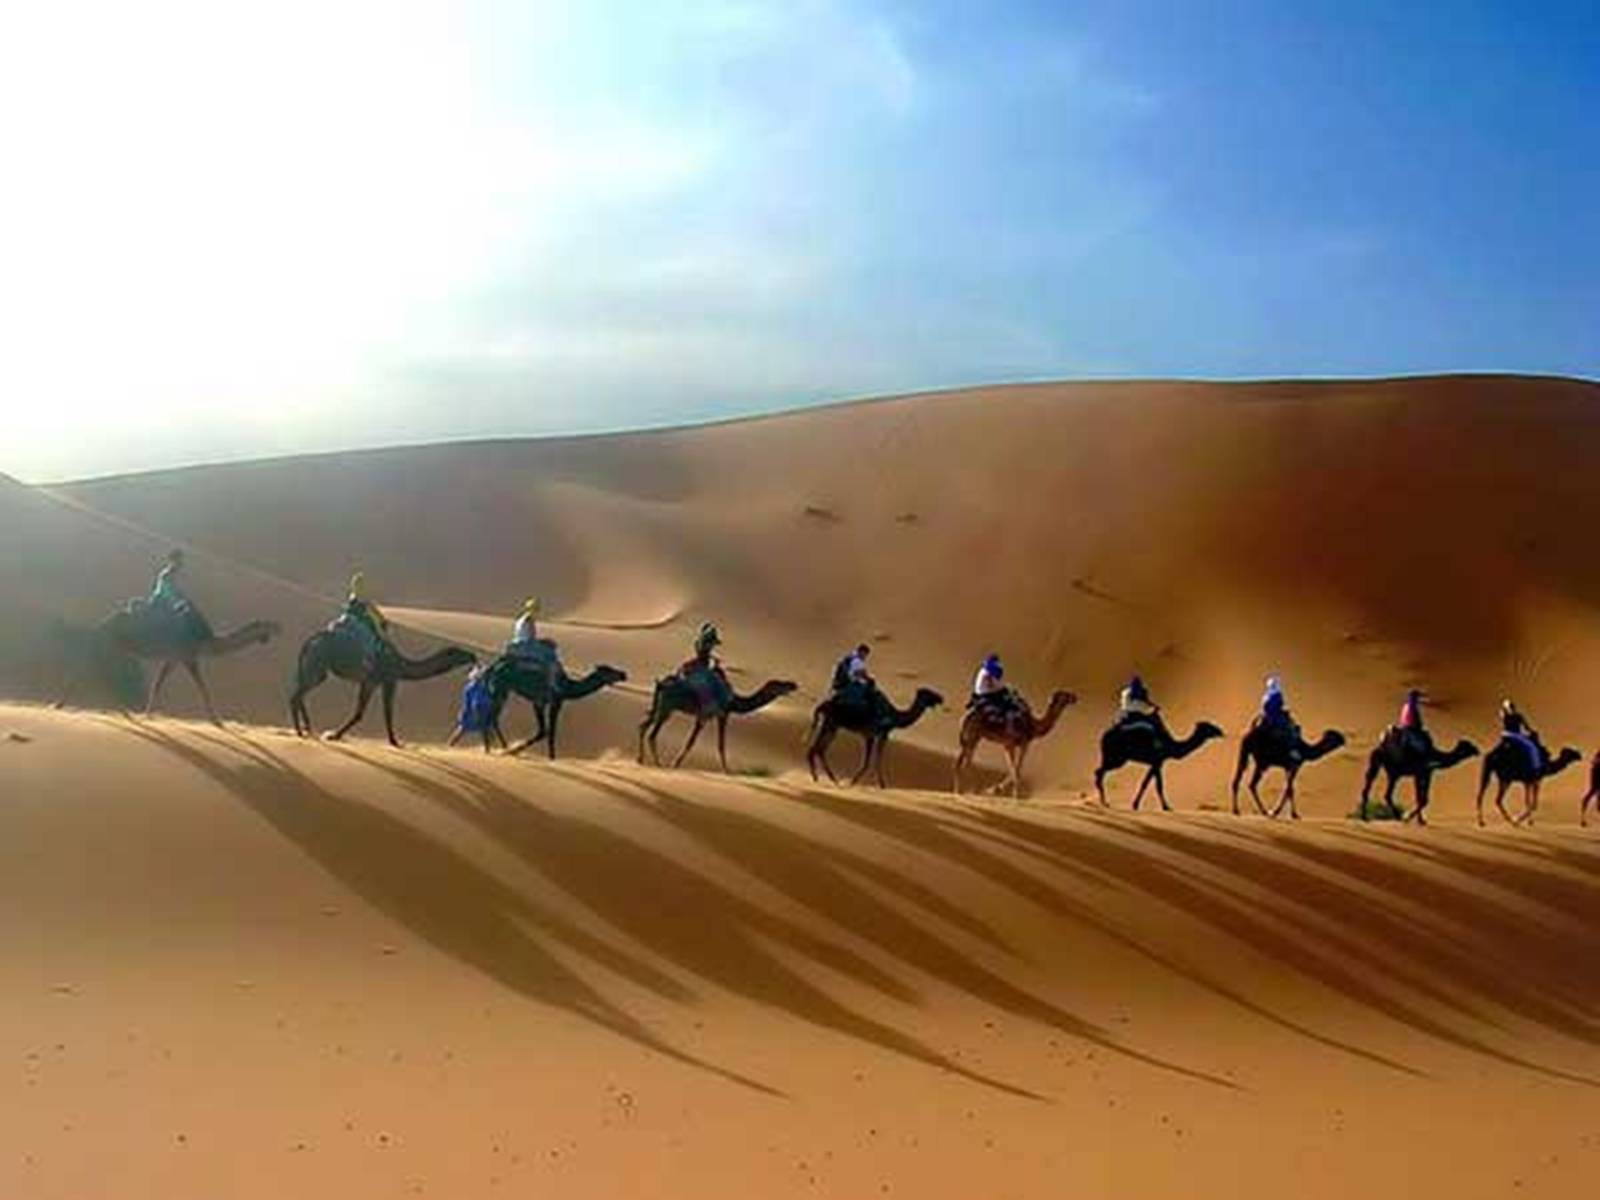 Караван какое слово. Караван верблюдов в пустыне фото. Ливийская пустыня. Пустыня сахара в Тунисе. Жители Туниса фото.